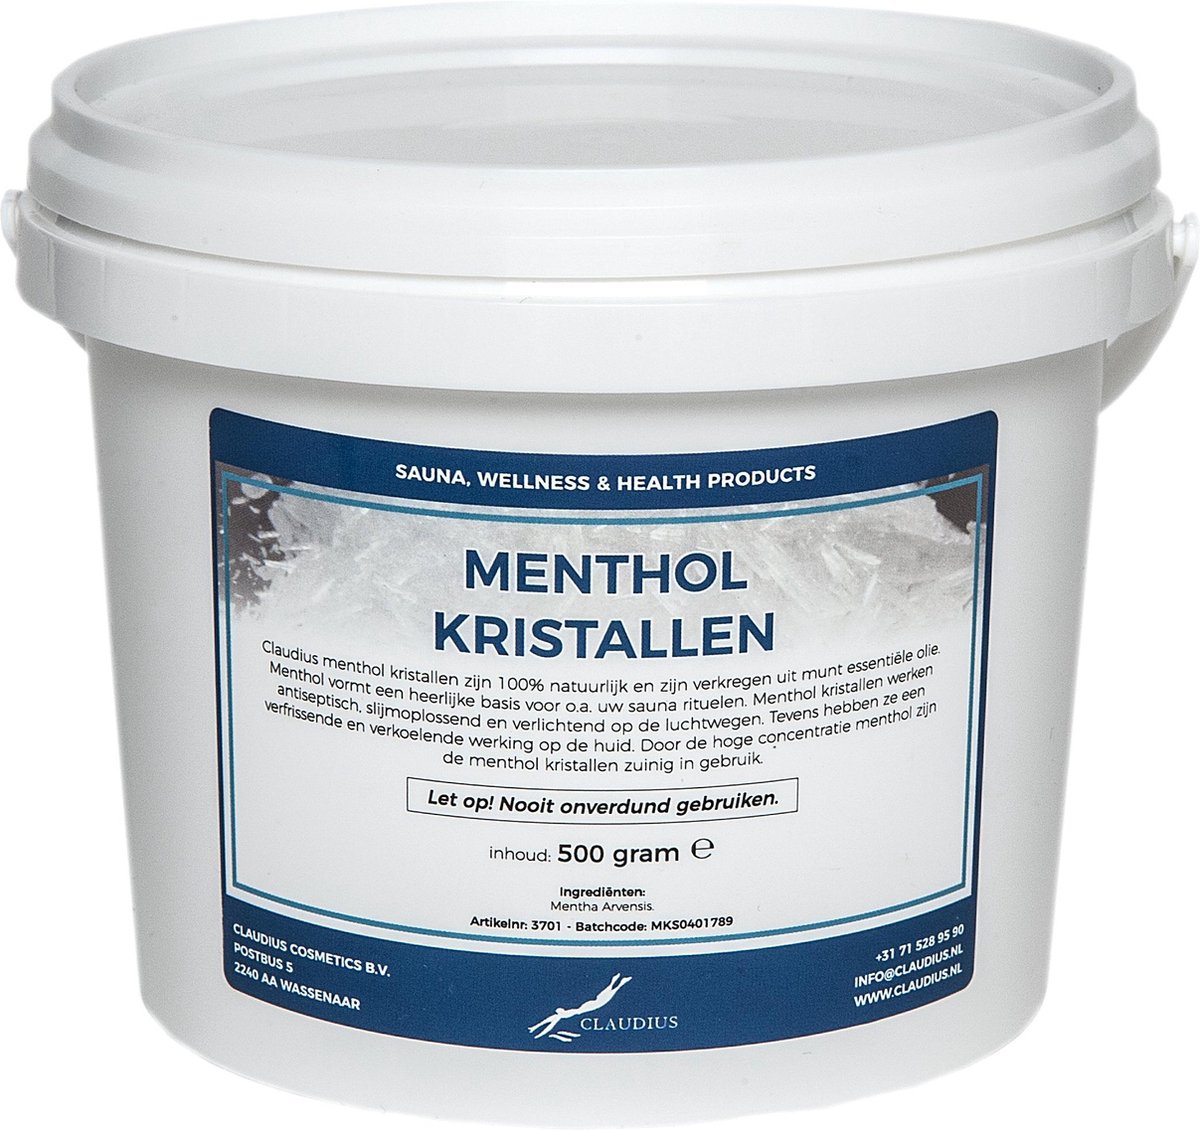 Menthol Kristallen 500 gram - Claudius Cosmetics B.V.